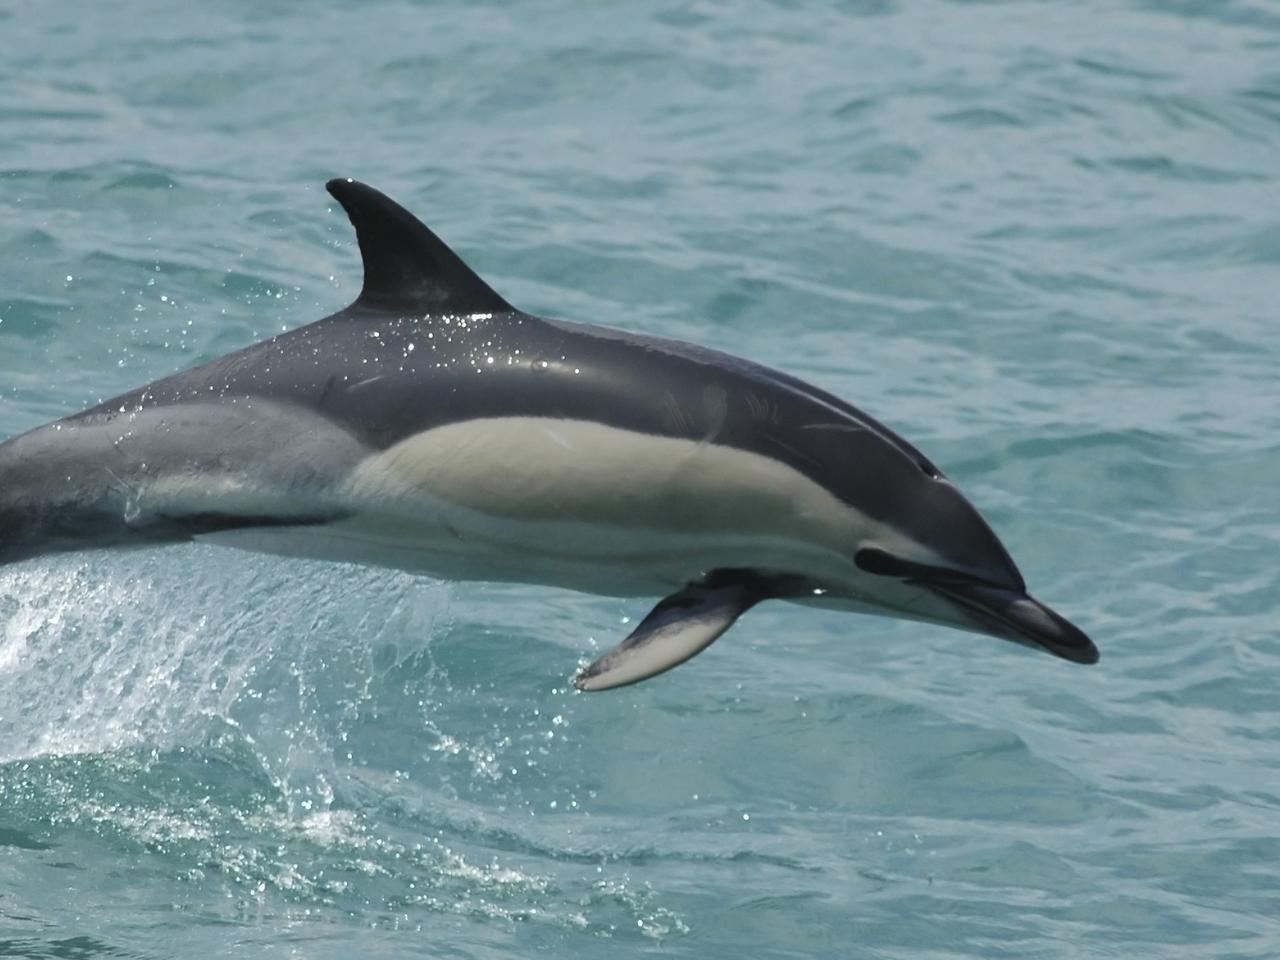 Rondreis langs Tuinroute Zuid-Afrika dolfijnen in de baai